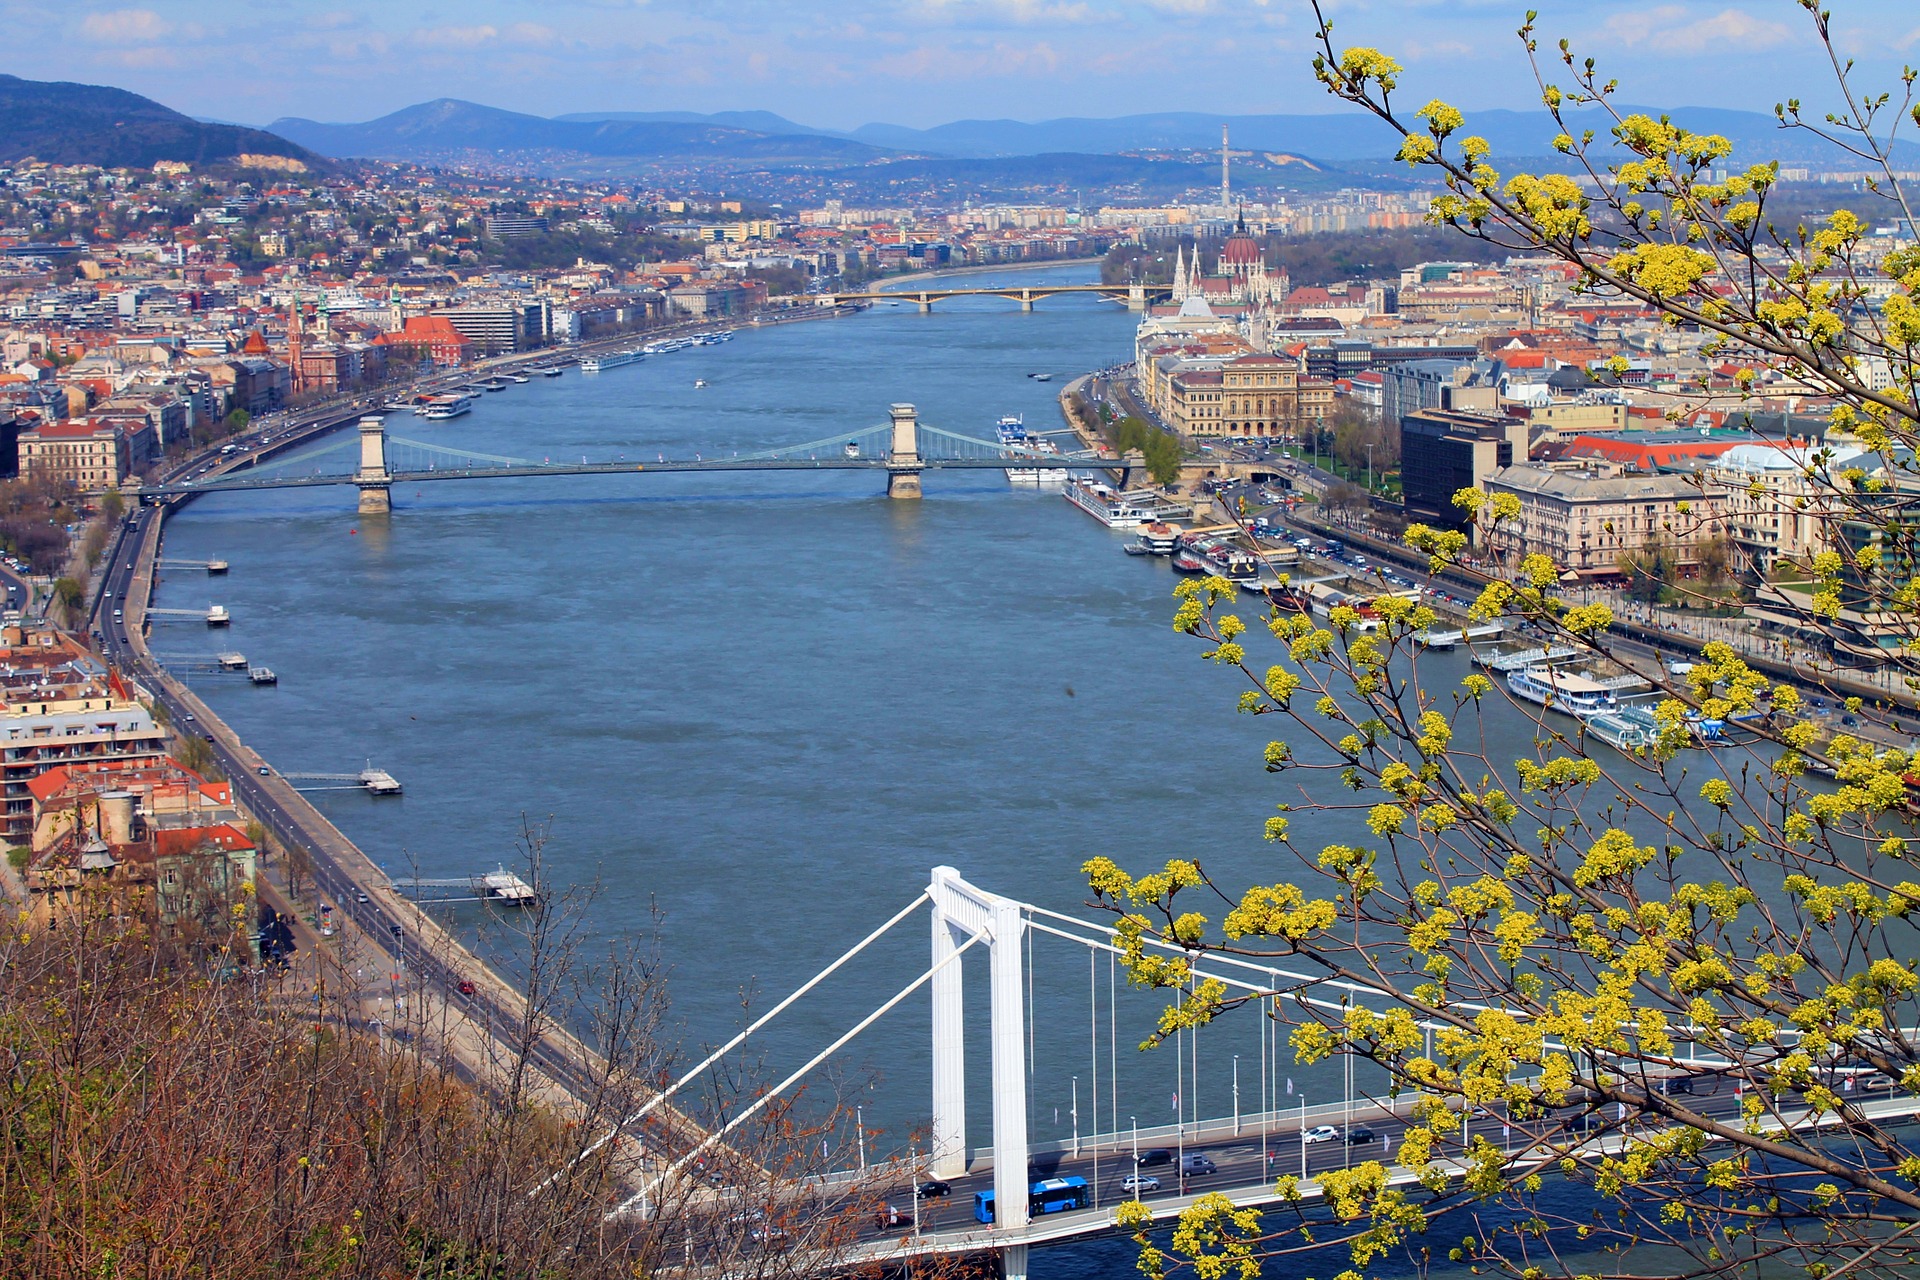 Danube River in Budapest, Hungary